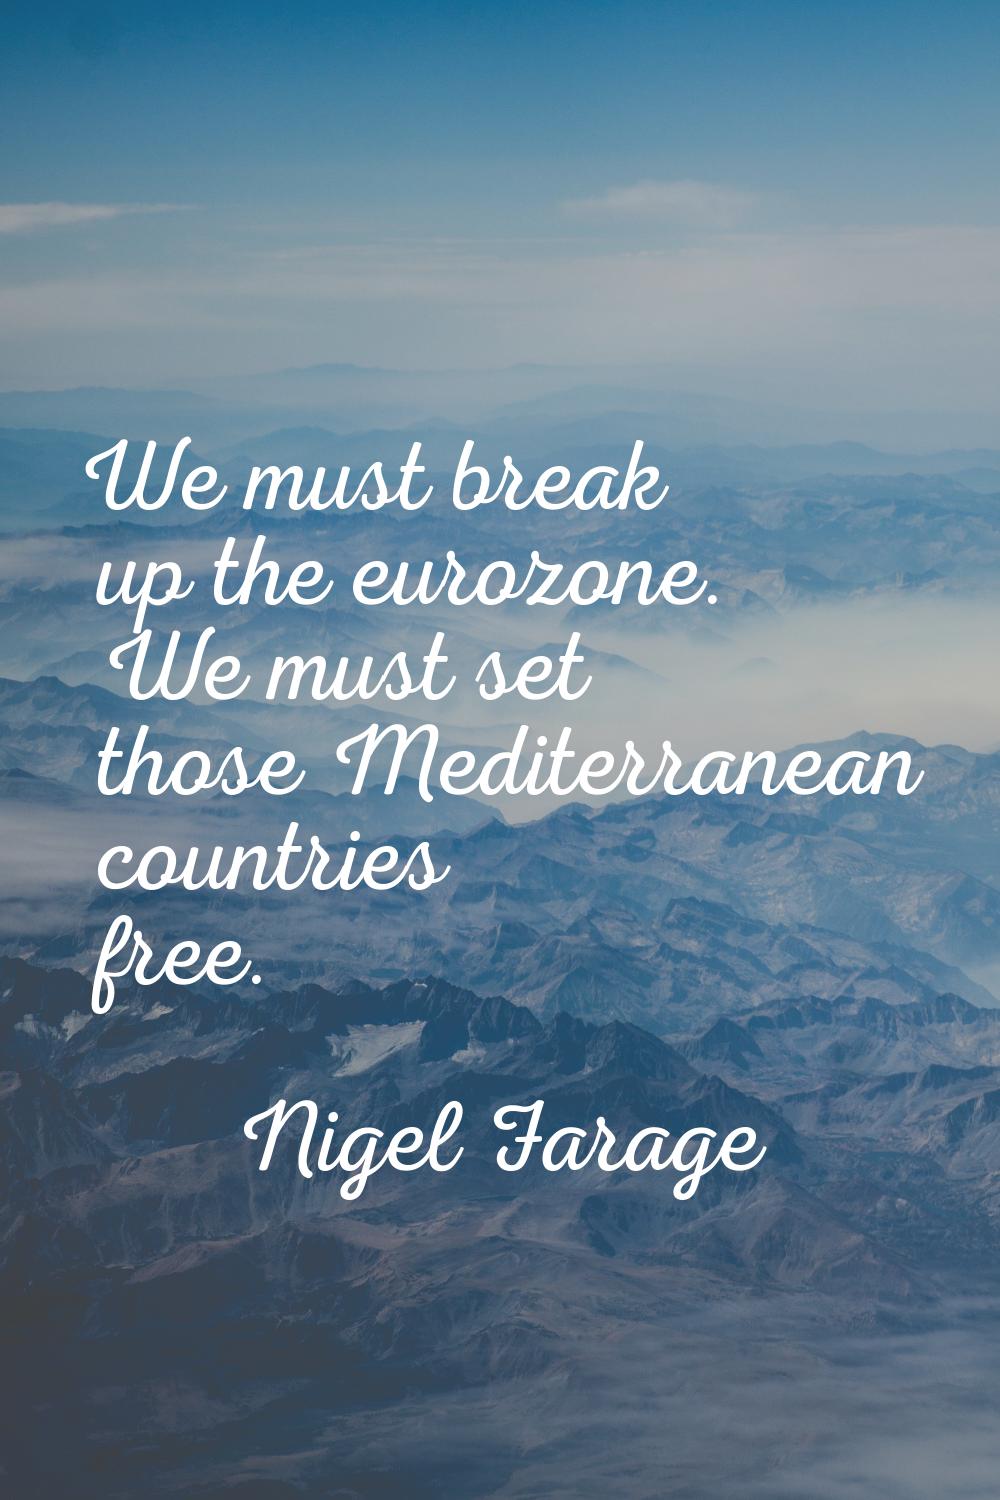 We must break up the eurozone. We must set those Mediterranean countries free.